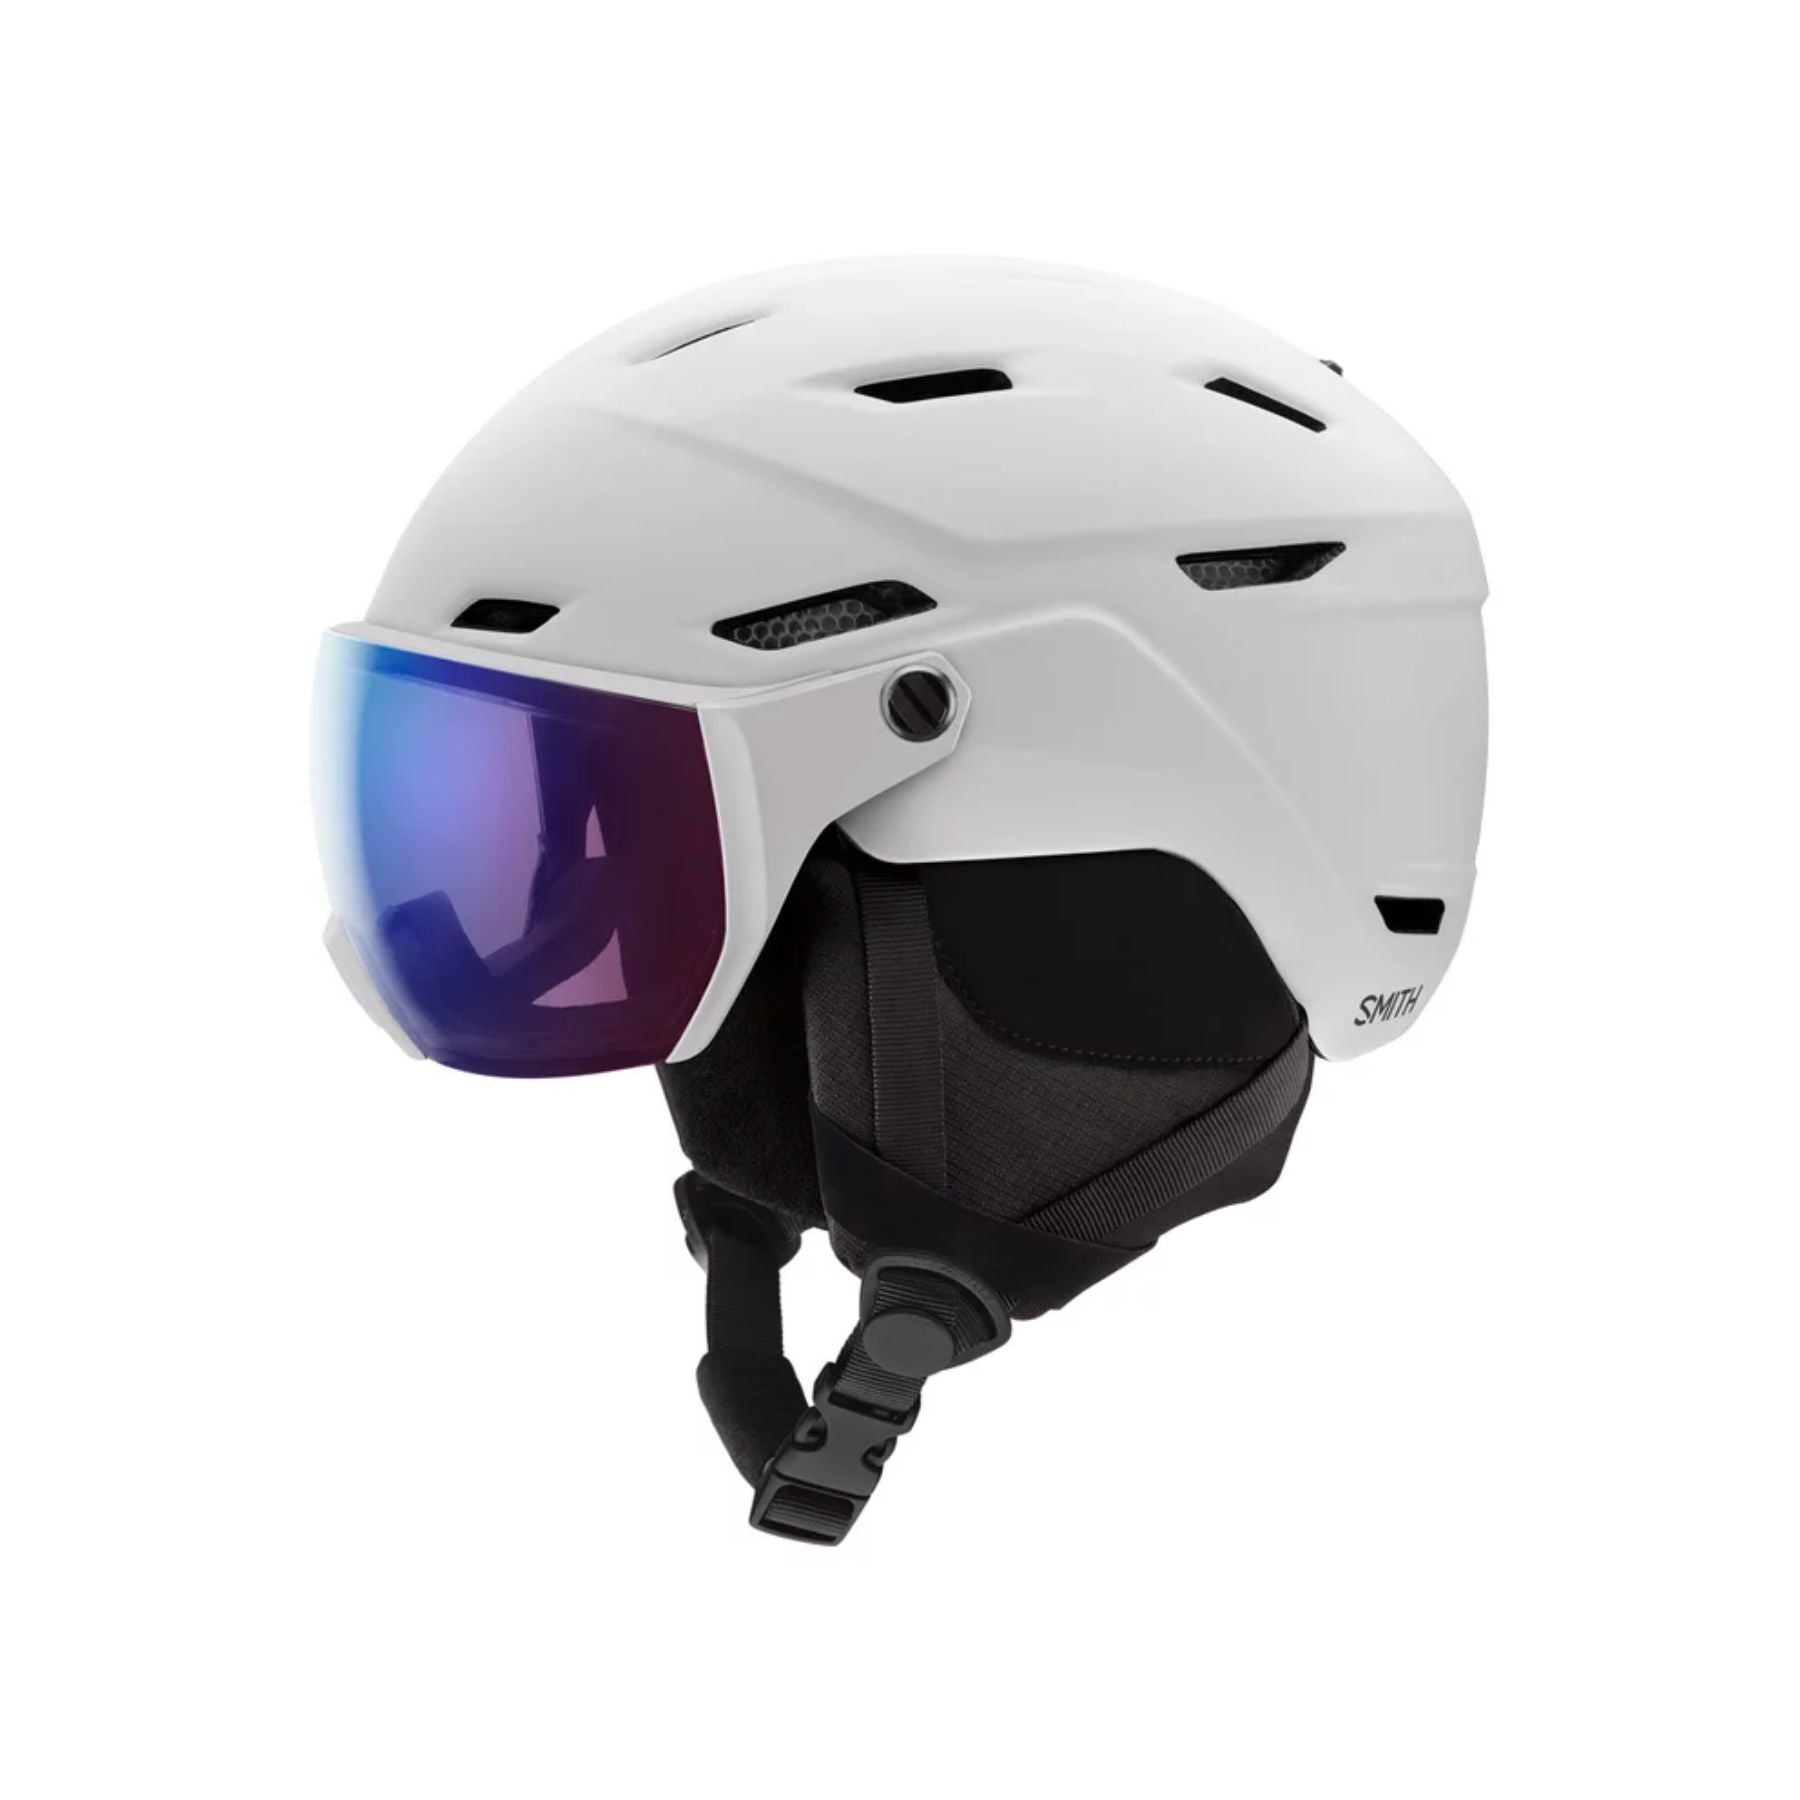 Smith Survey Helmet in Matte White